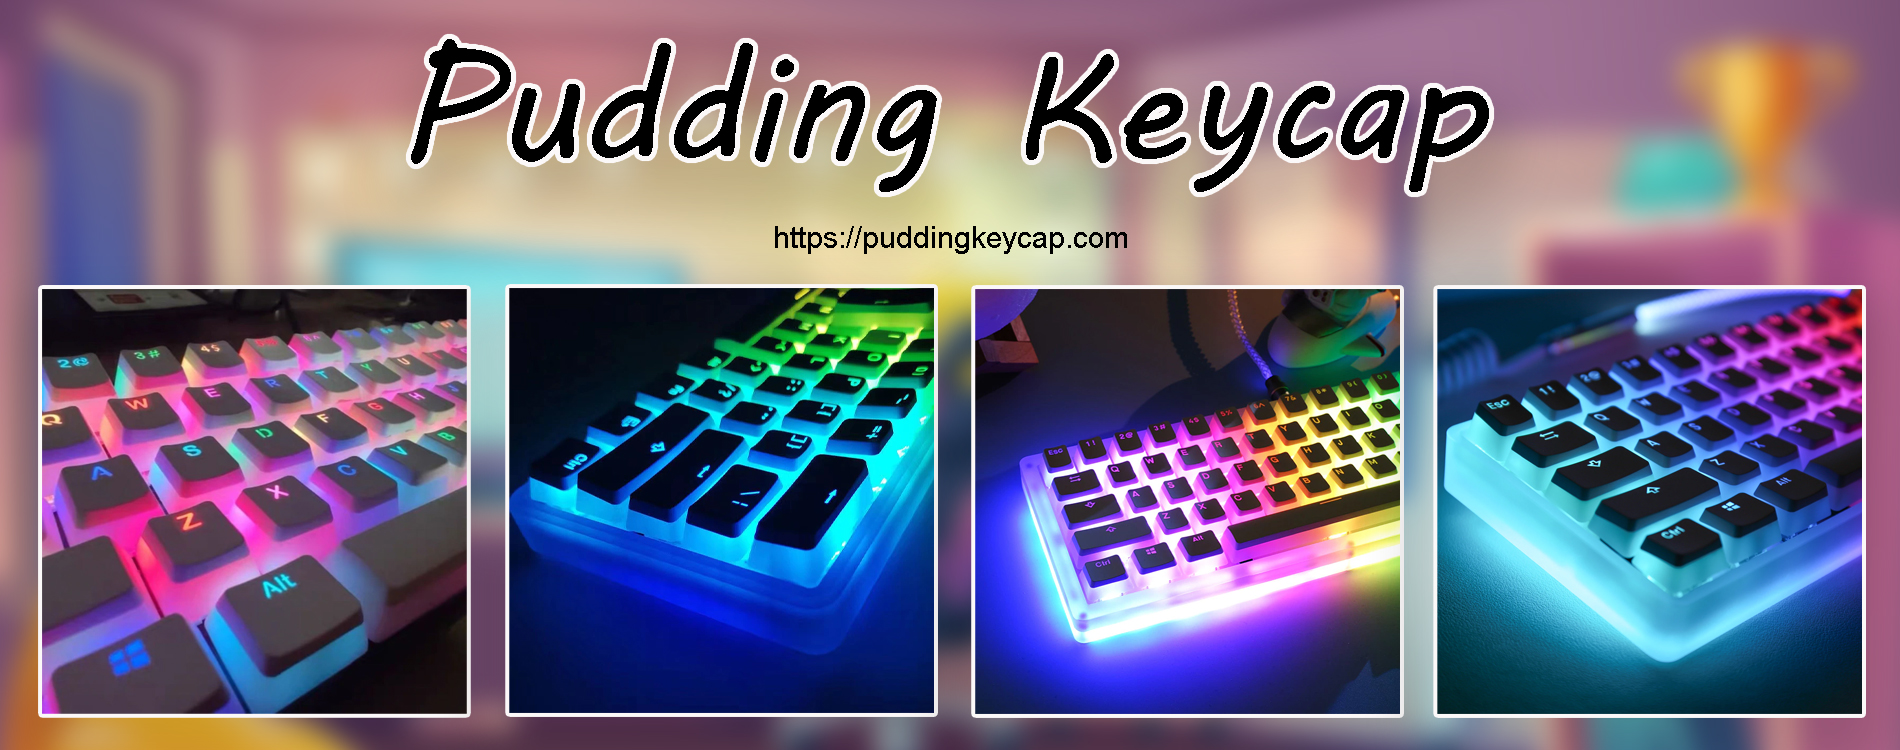 pudding-keycap-banner